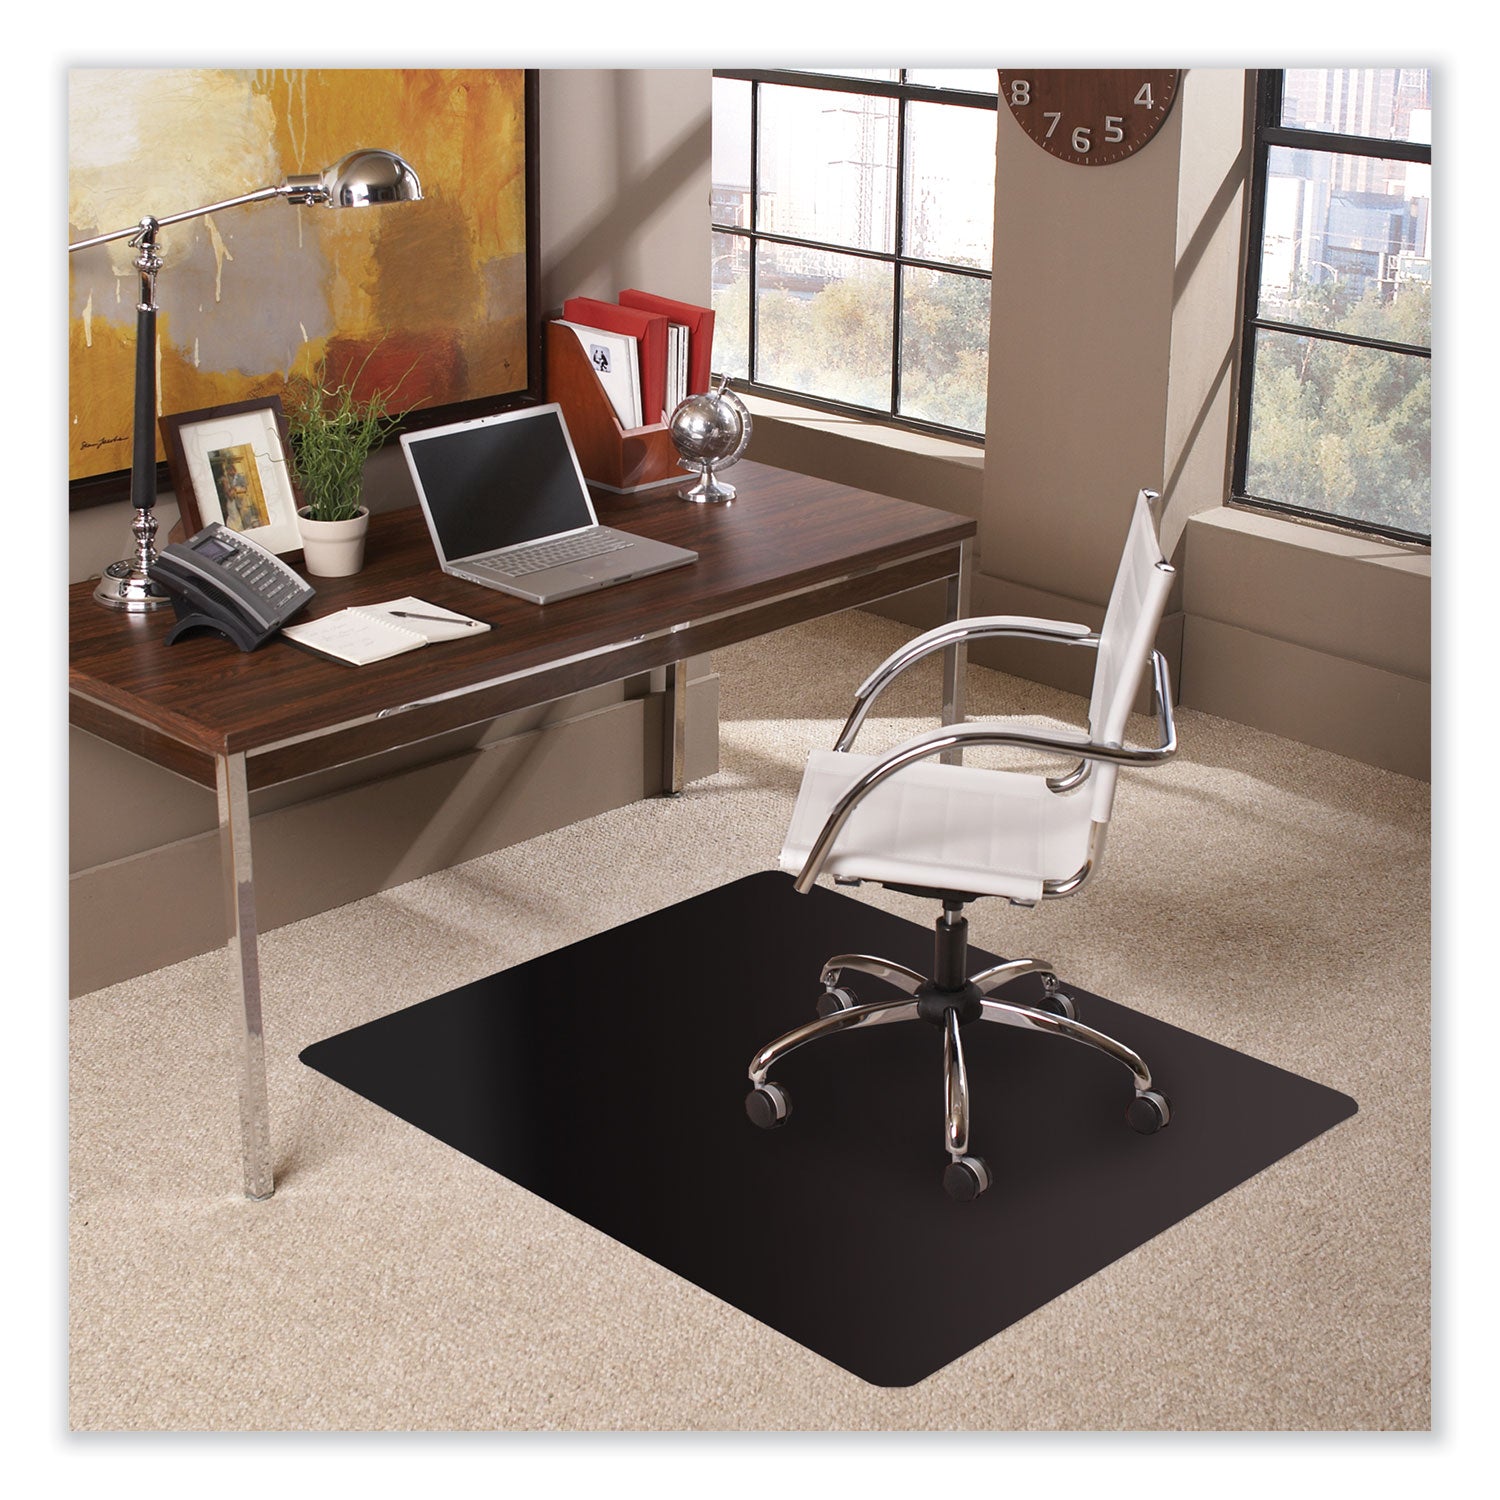 trendsetter-chair-mat-for-low-pile-carpet-36-x-48-black-ships-in-4-6-business-days_esr128013 - 2